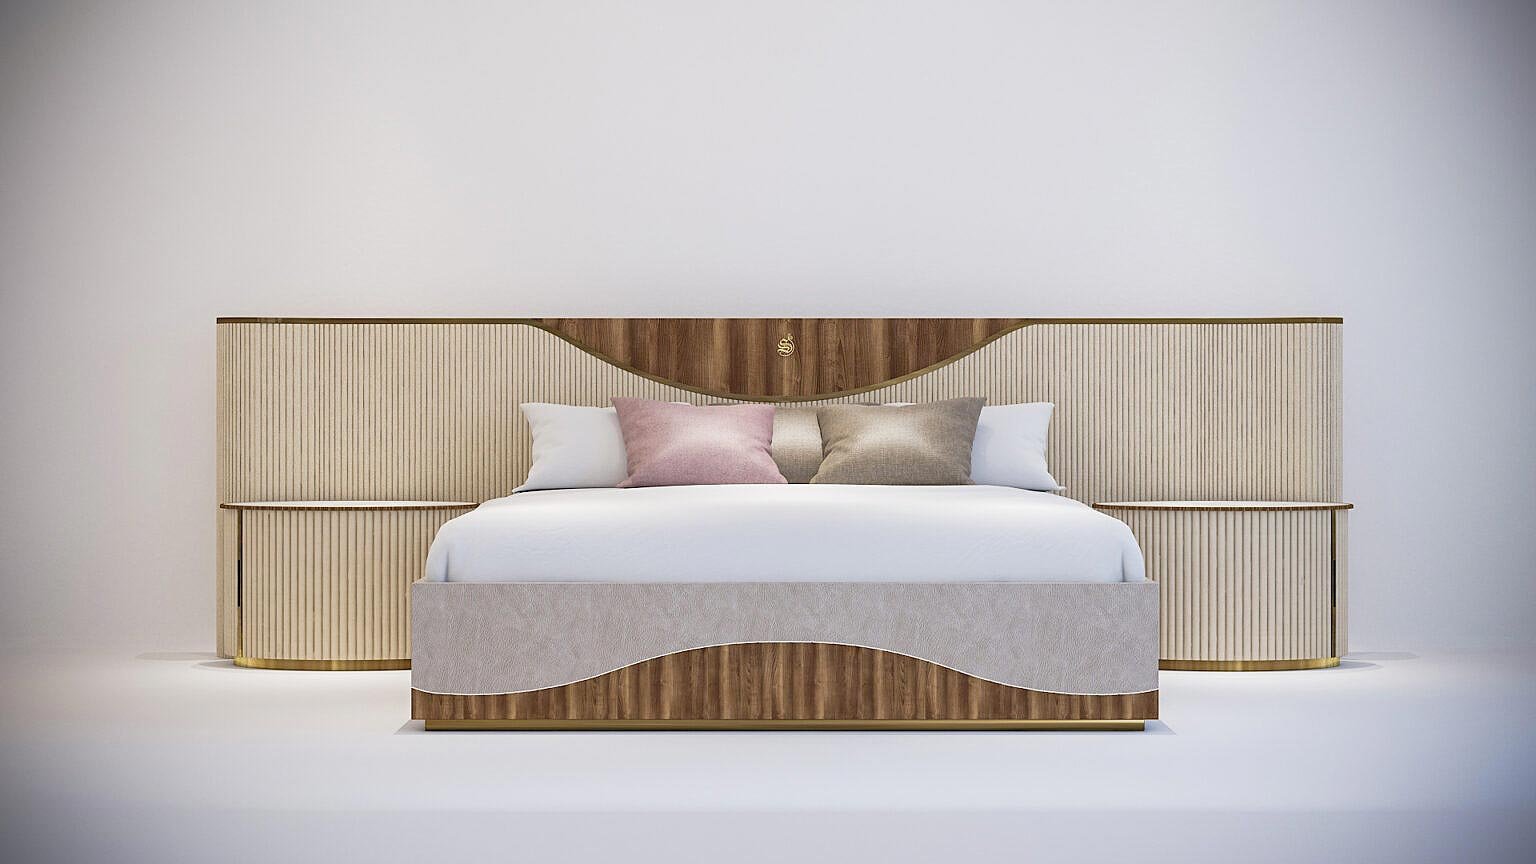 Jelly fish luxurious bed _ furniture _ shruti sodhi interior designs.